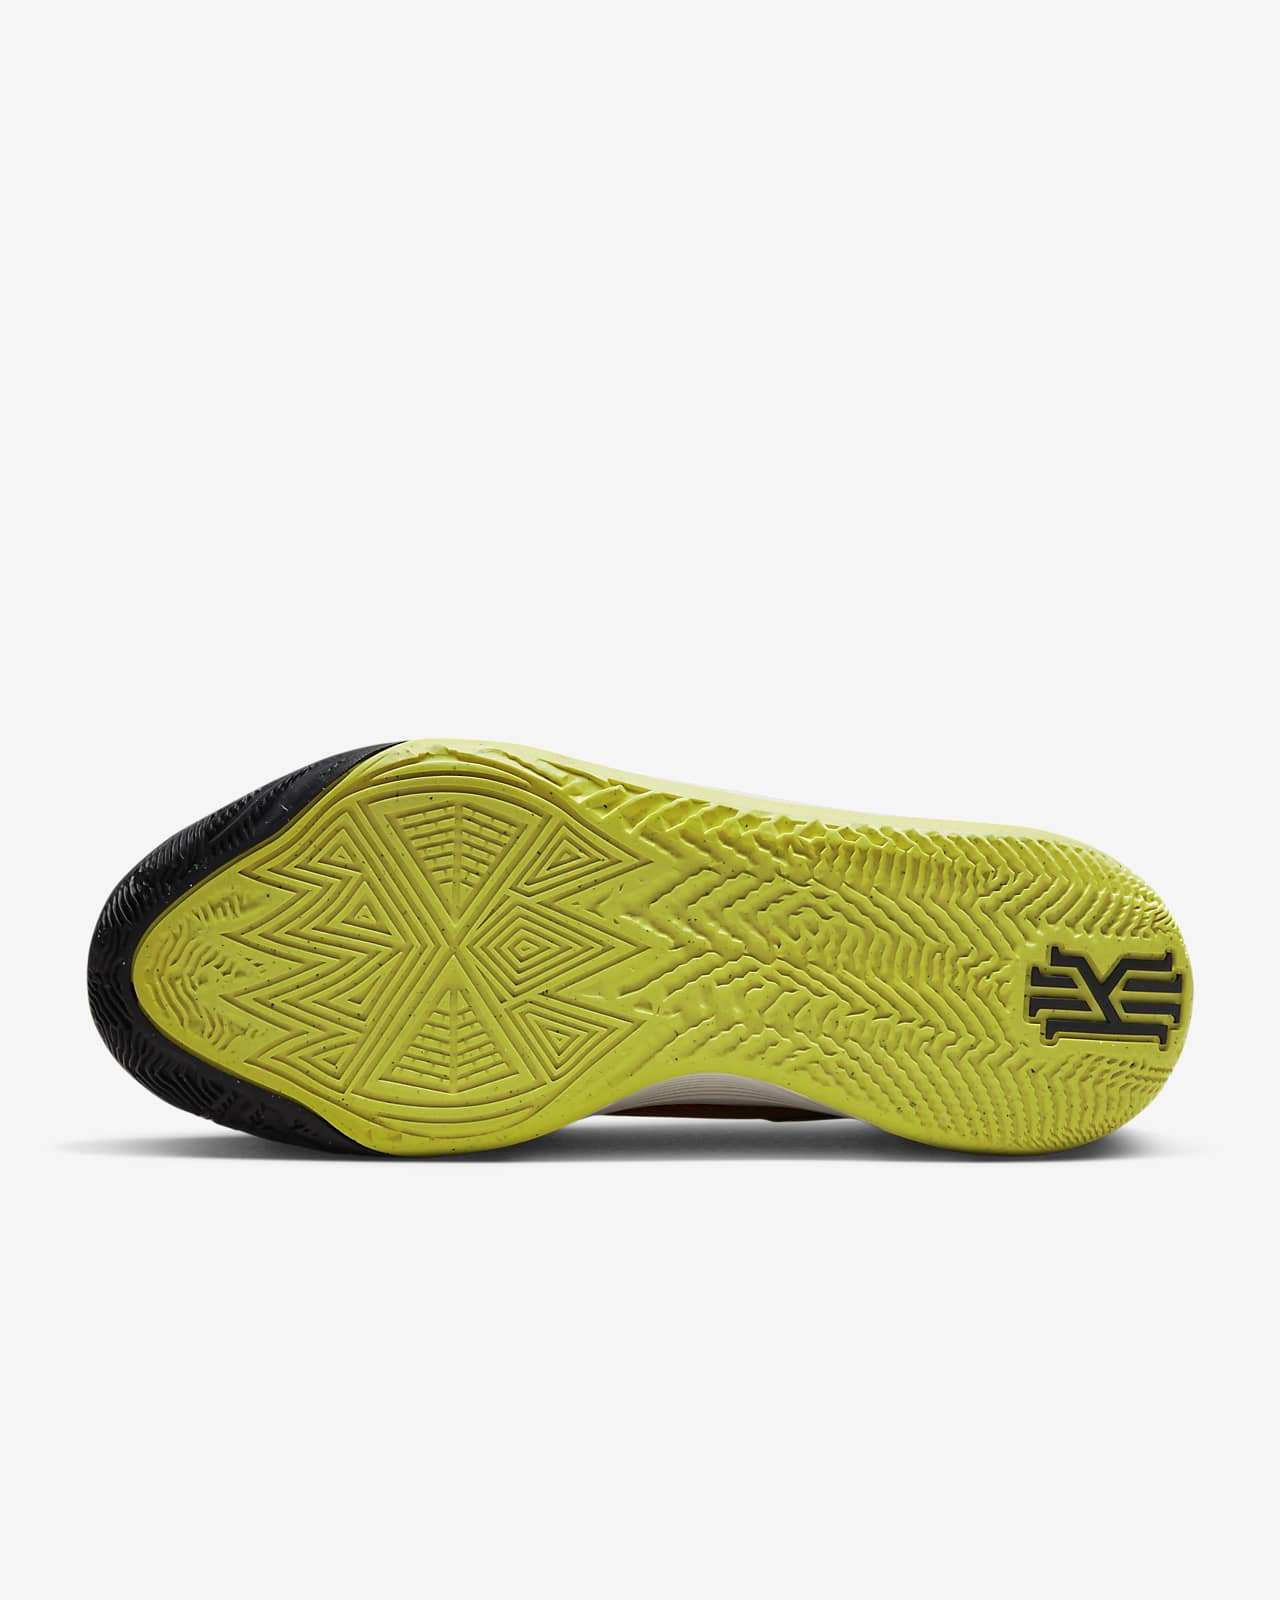 Kyrie Flytrap 6 Basketball Shoes. Nike AE